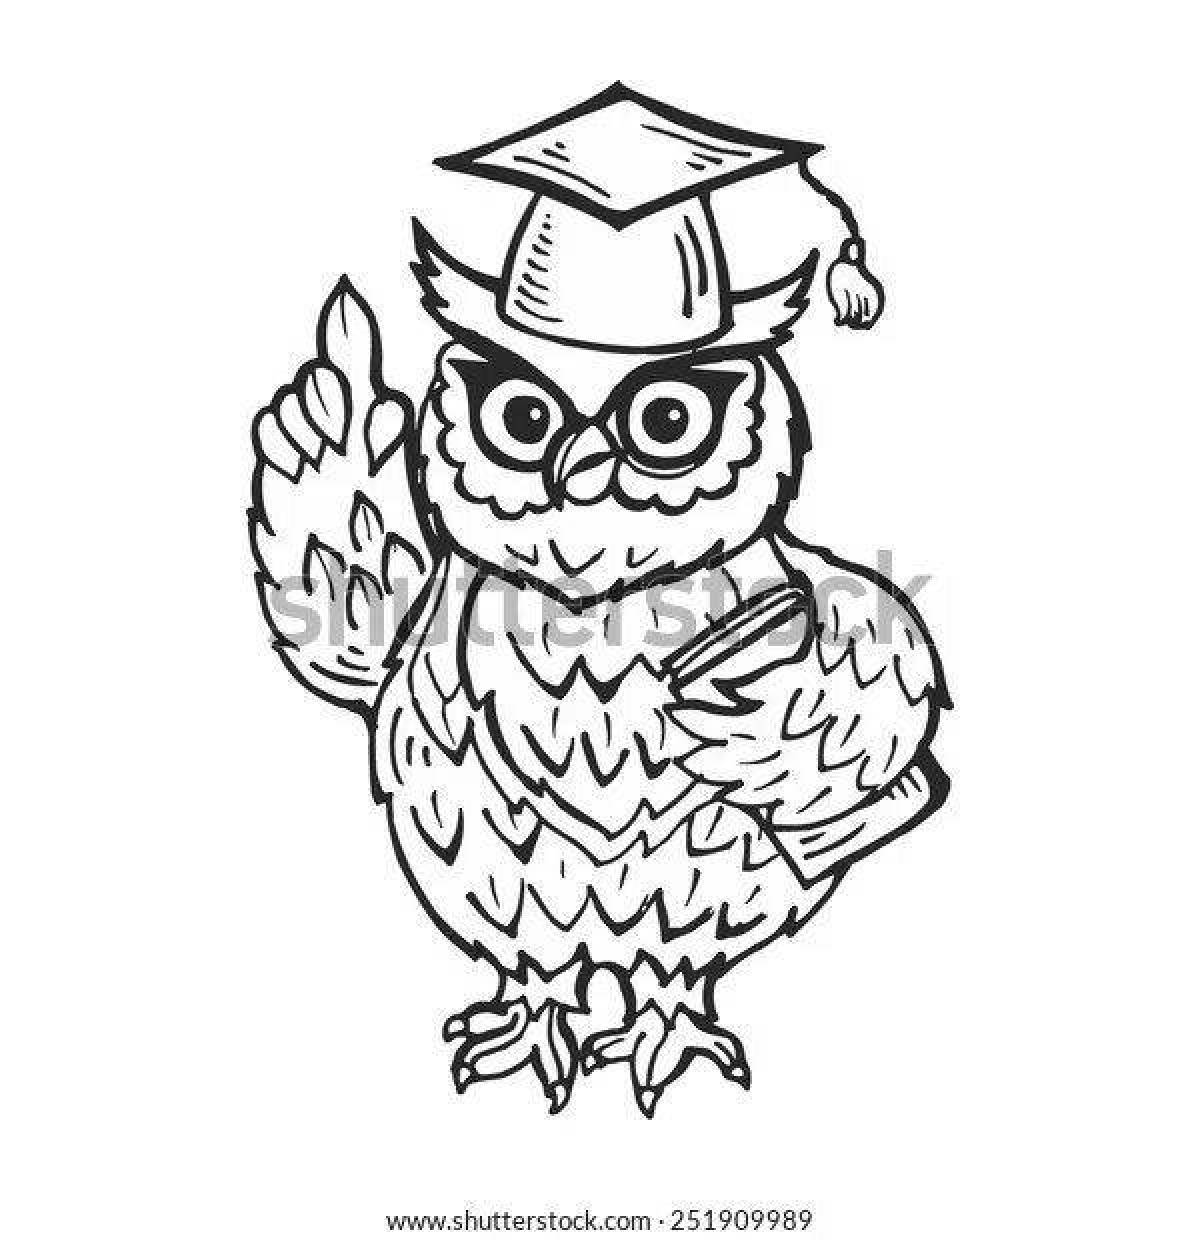 Coloring book smart smart owl